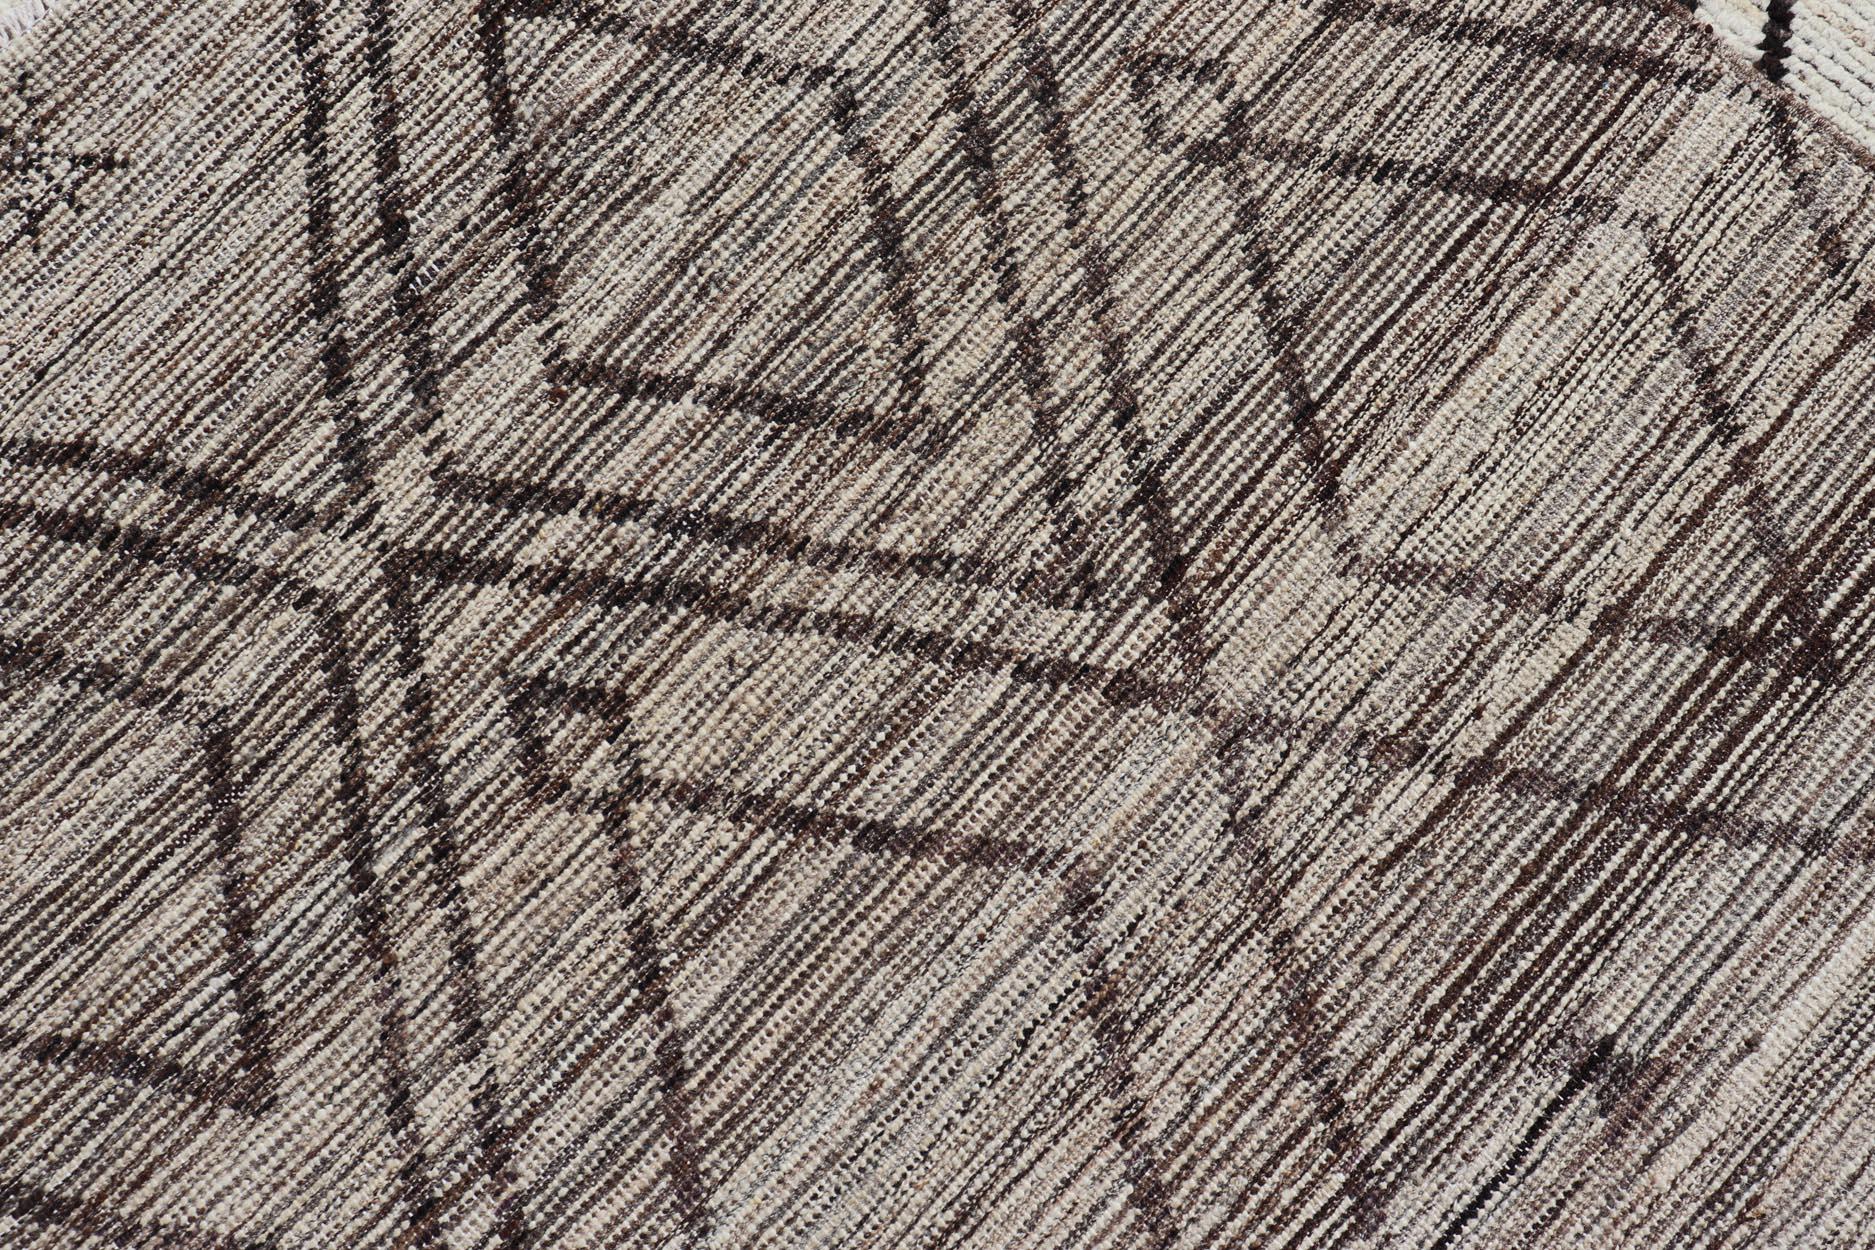  Tribal Moroccan Modern Rug in Wool with Geometric Diamond Design  For Sale 9